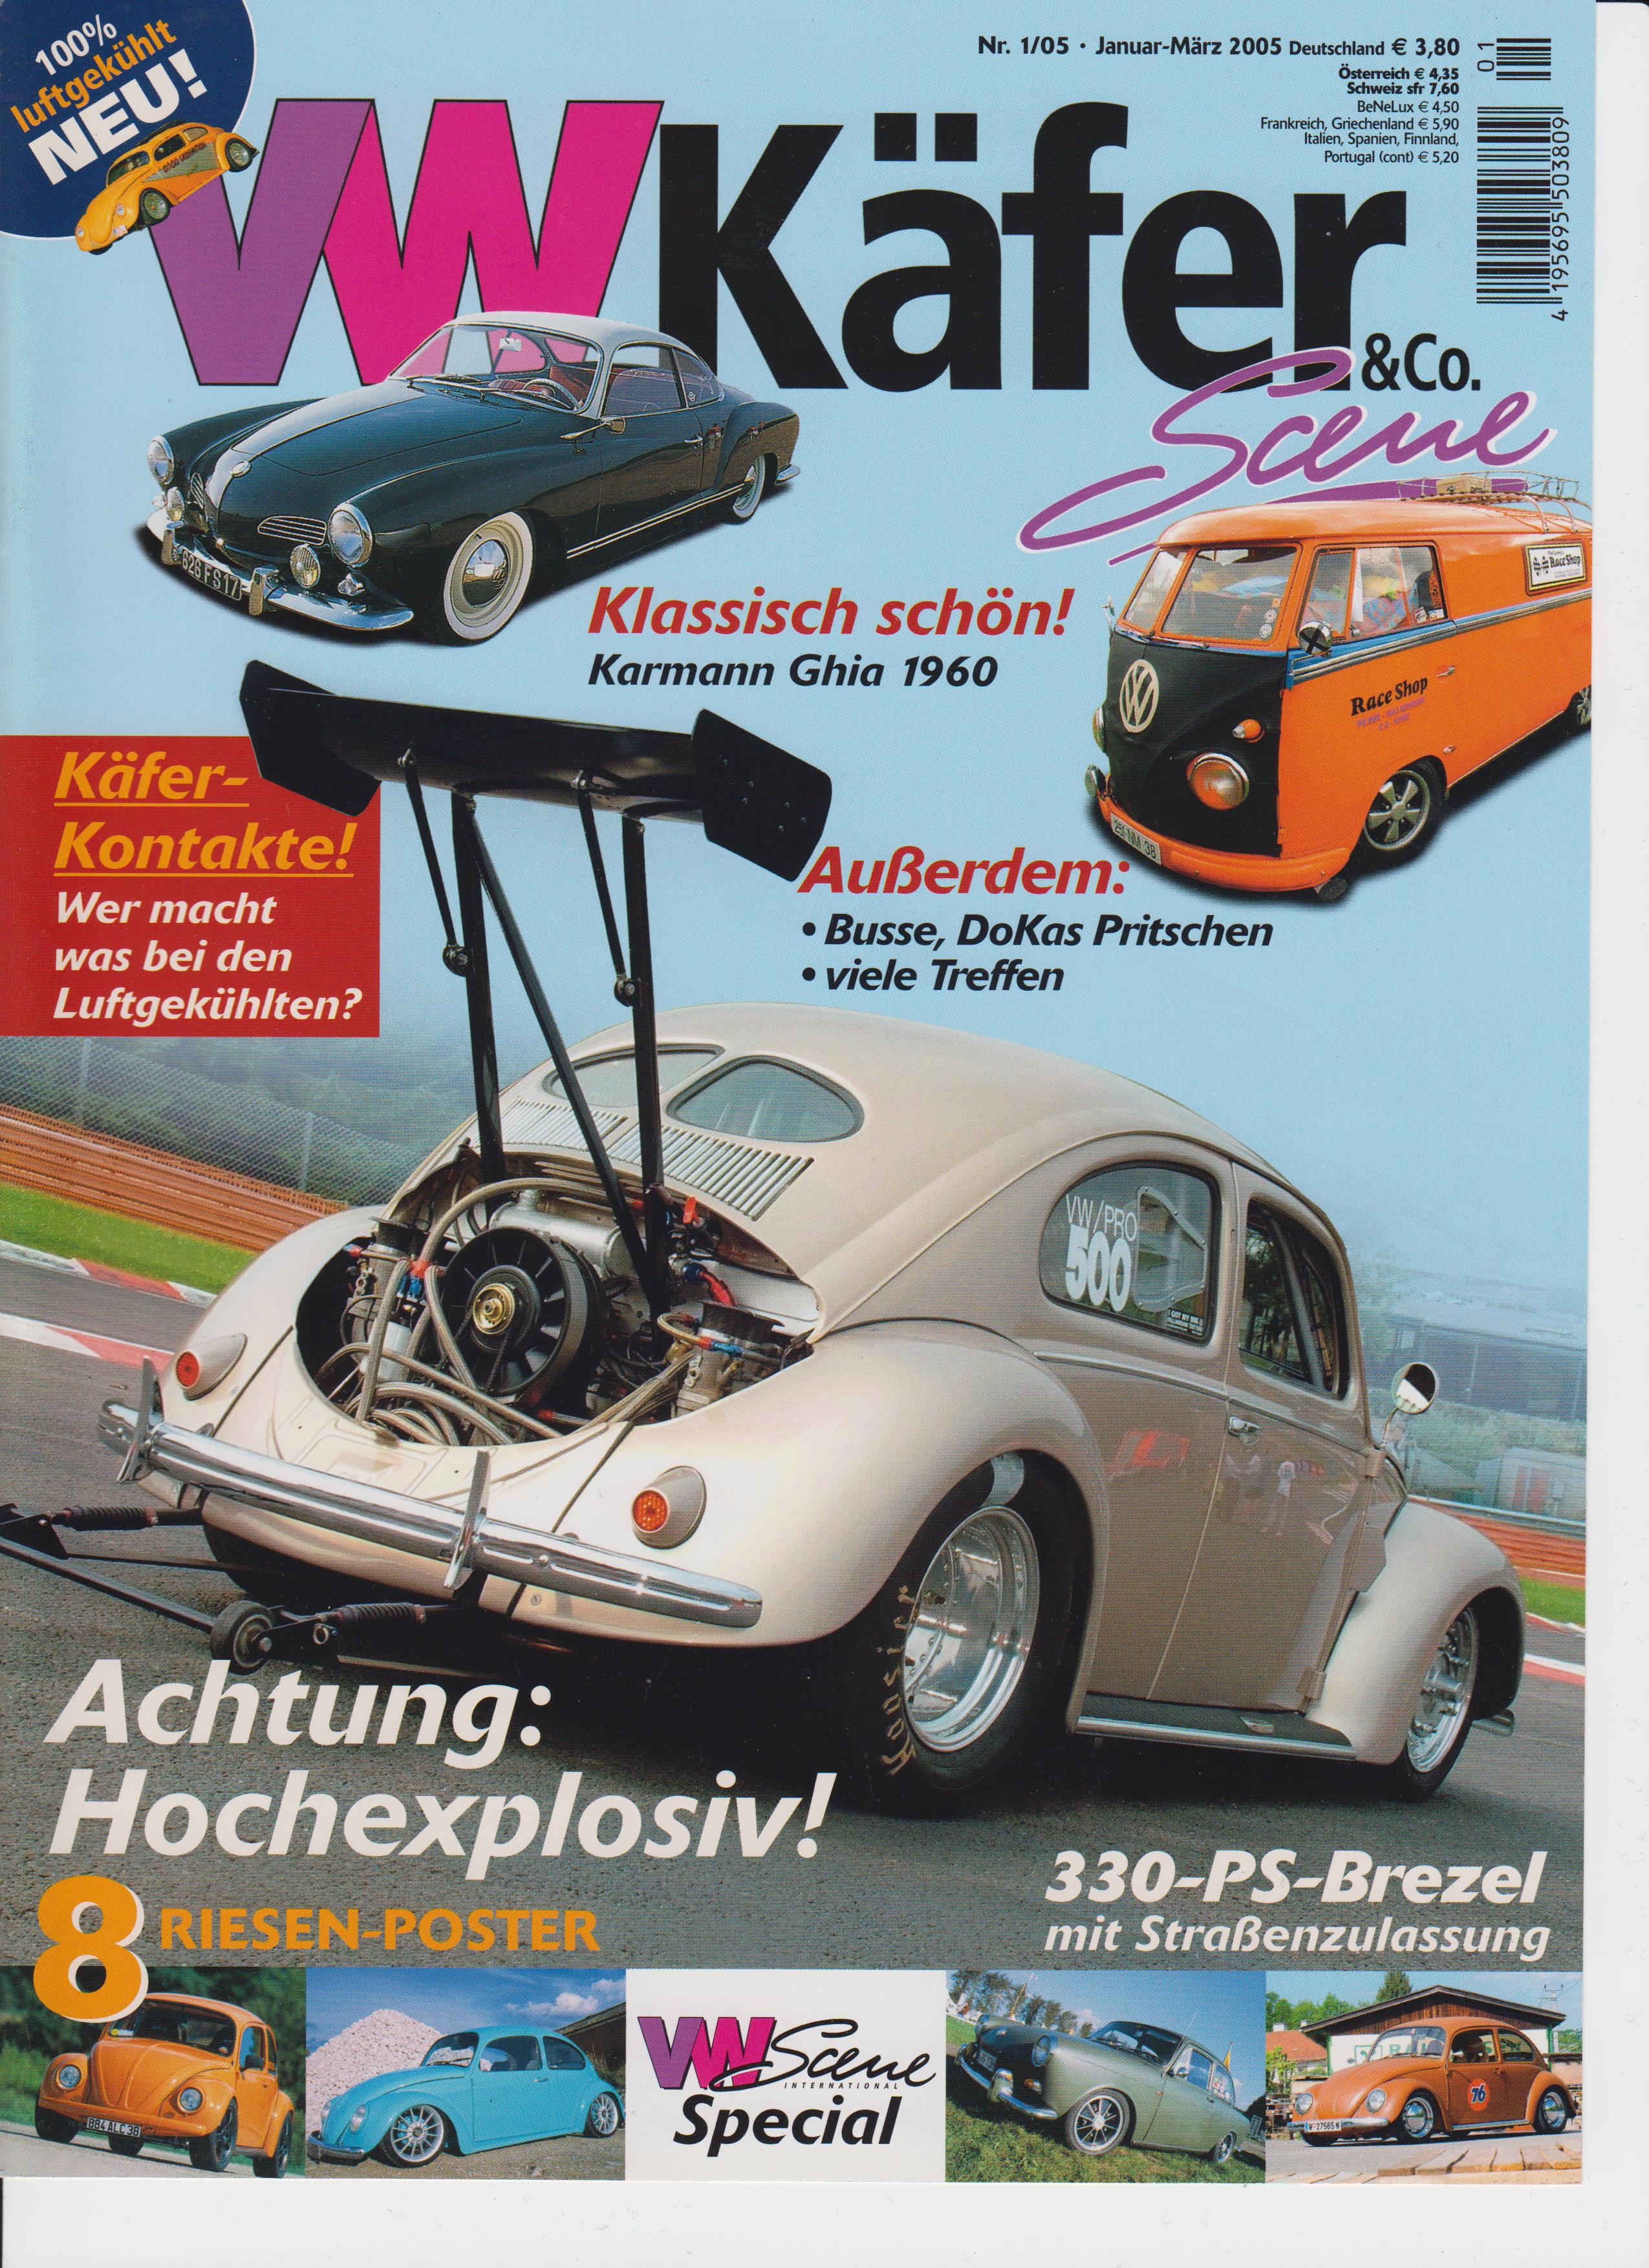 Trade journal VW Beetle 01 2005